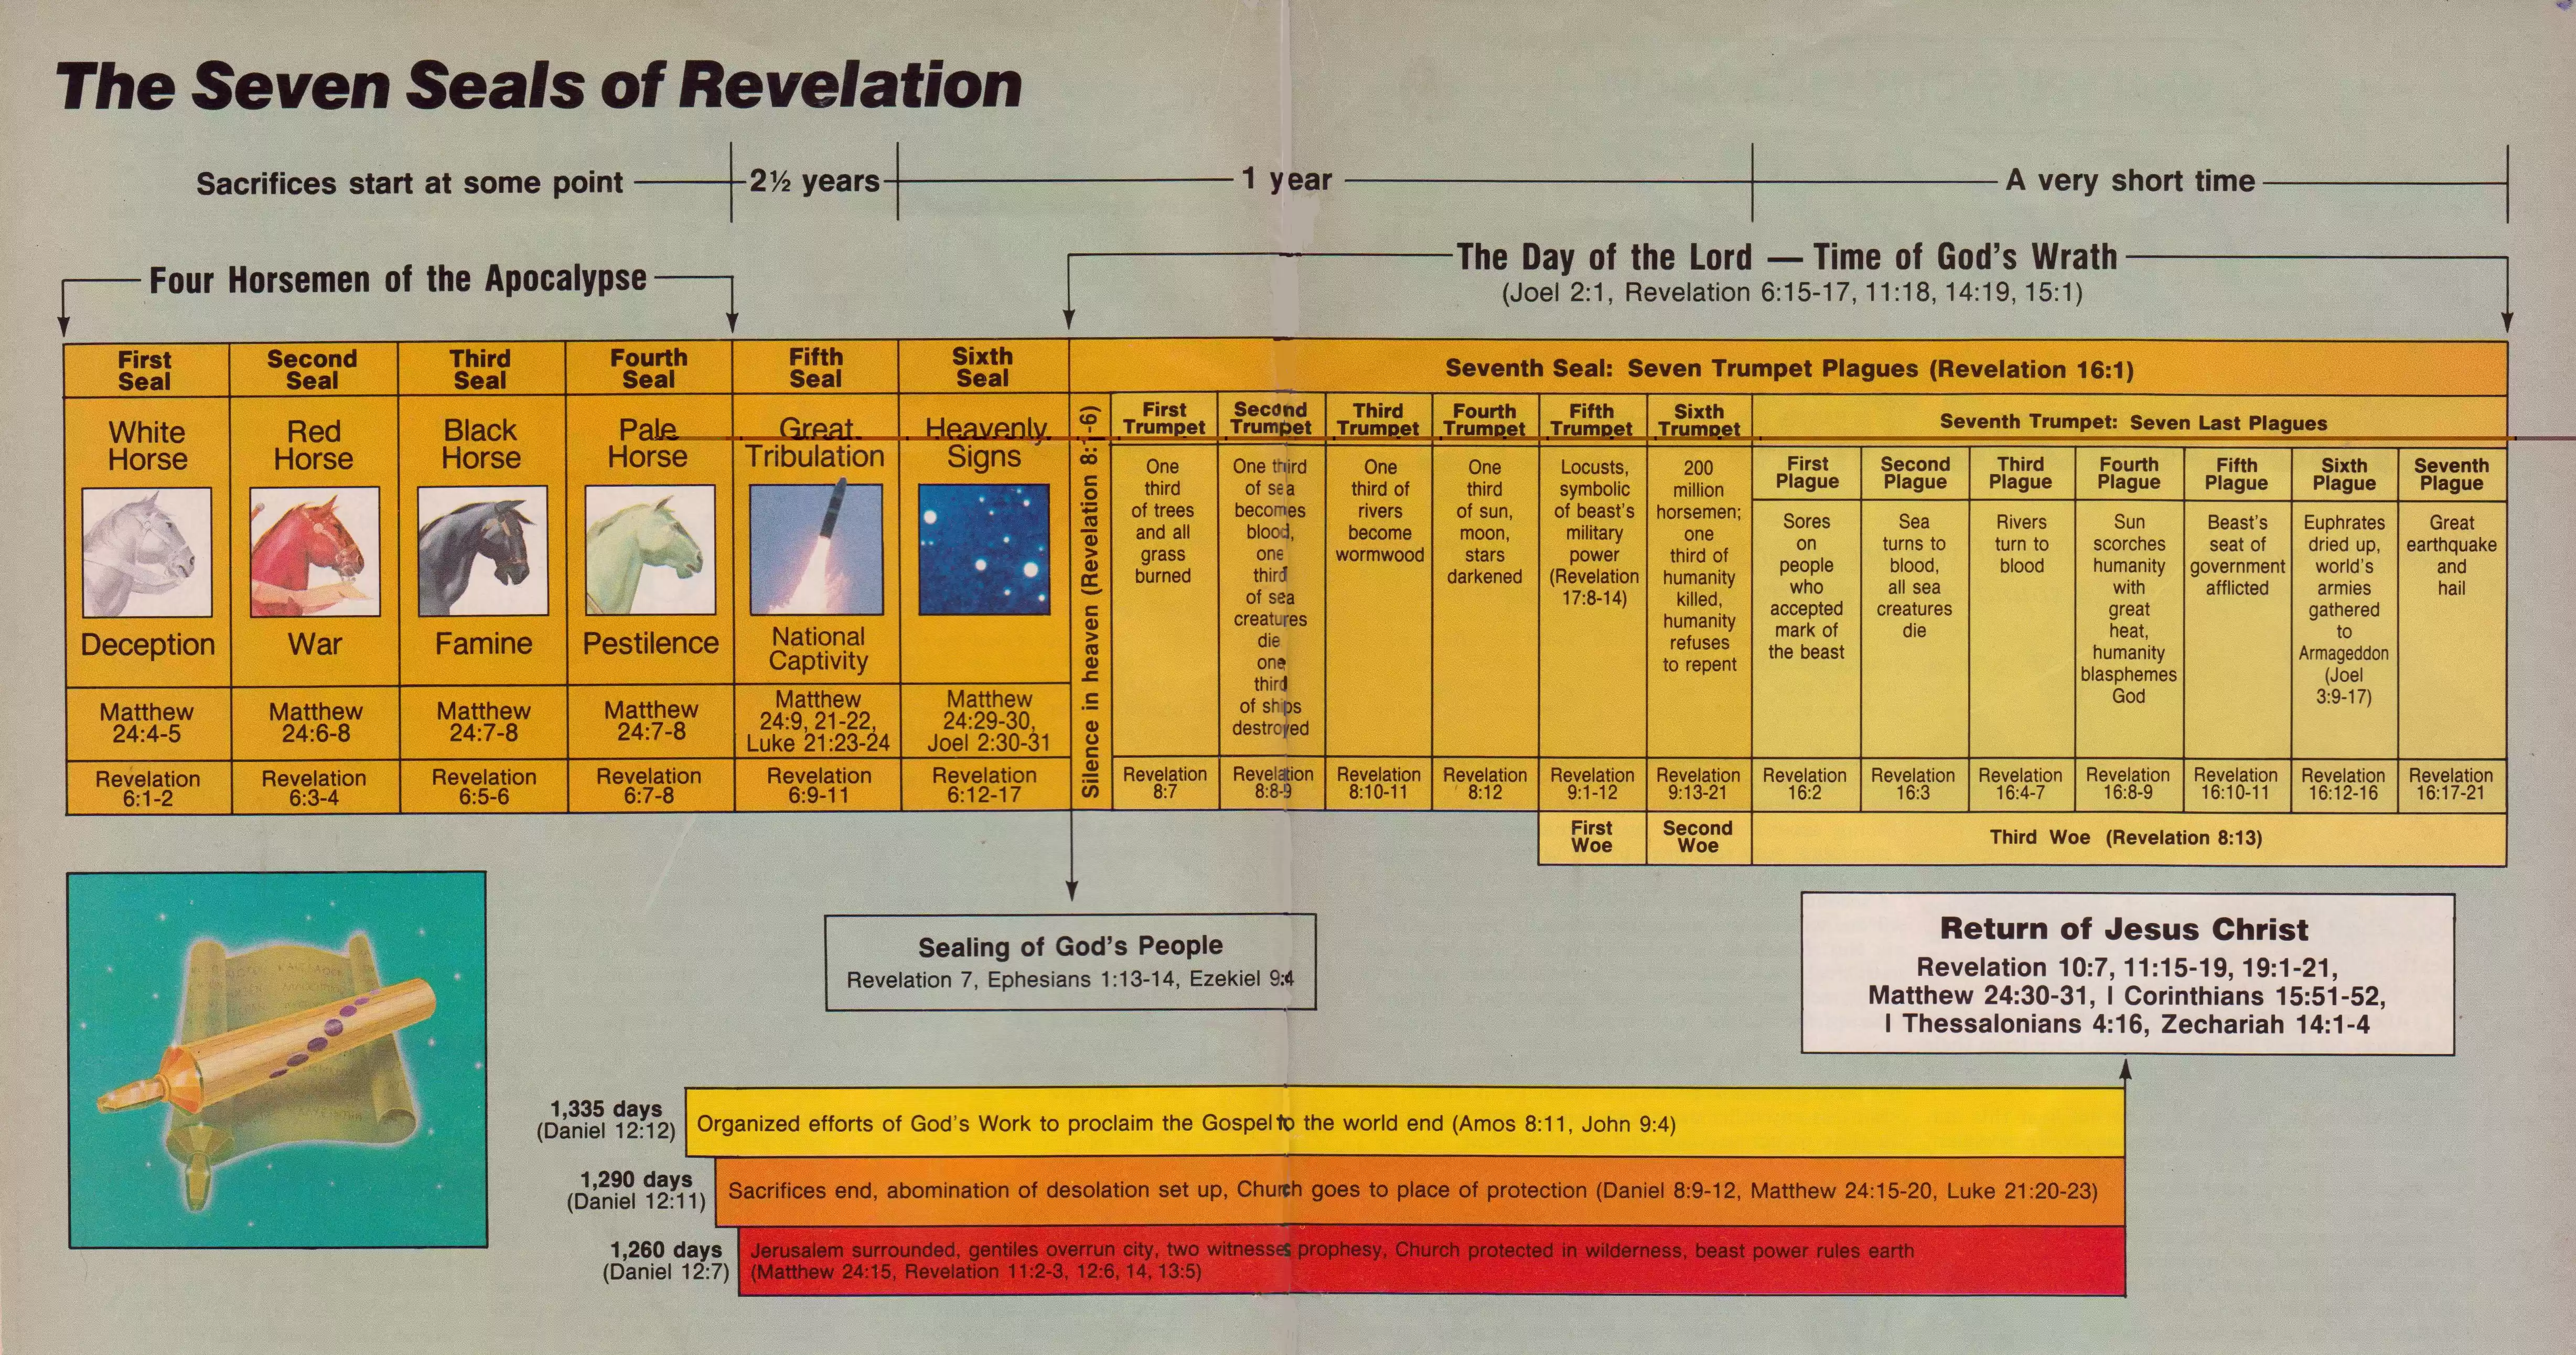 The Seven Seals of Revelation(WCG)